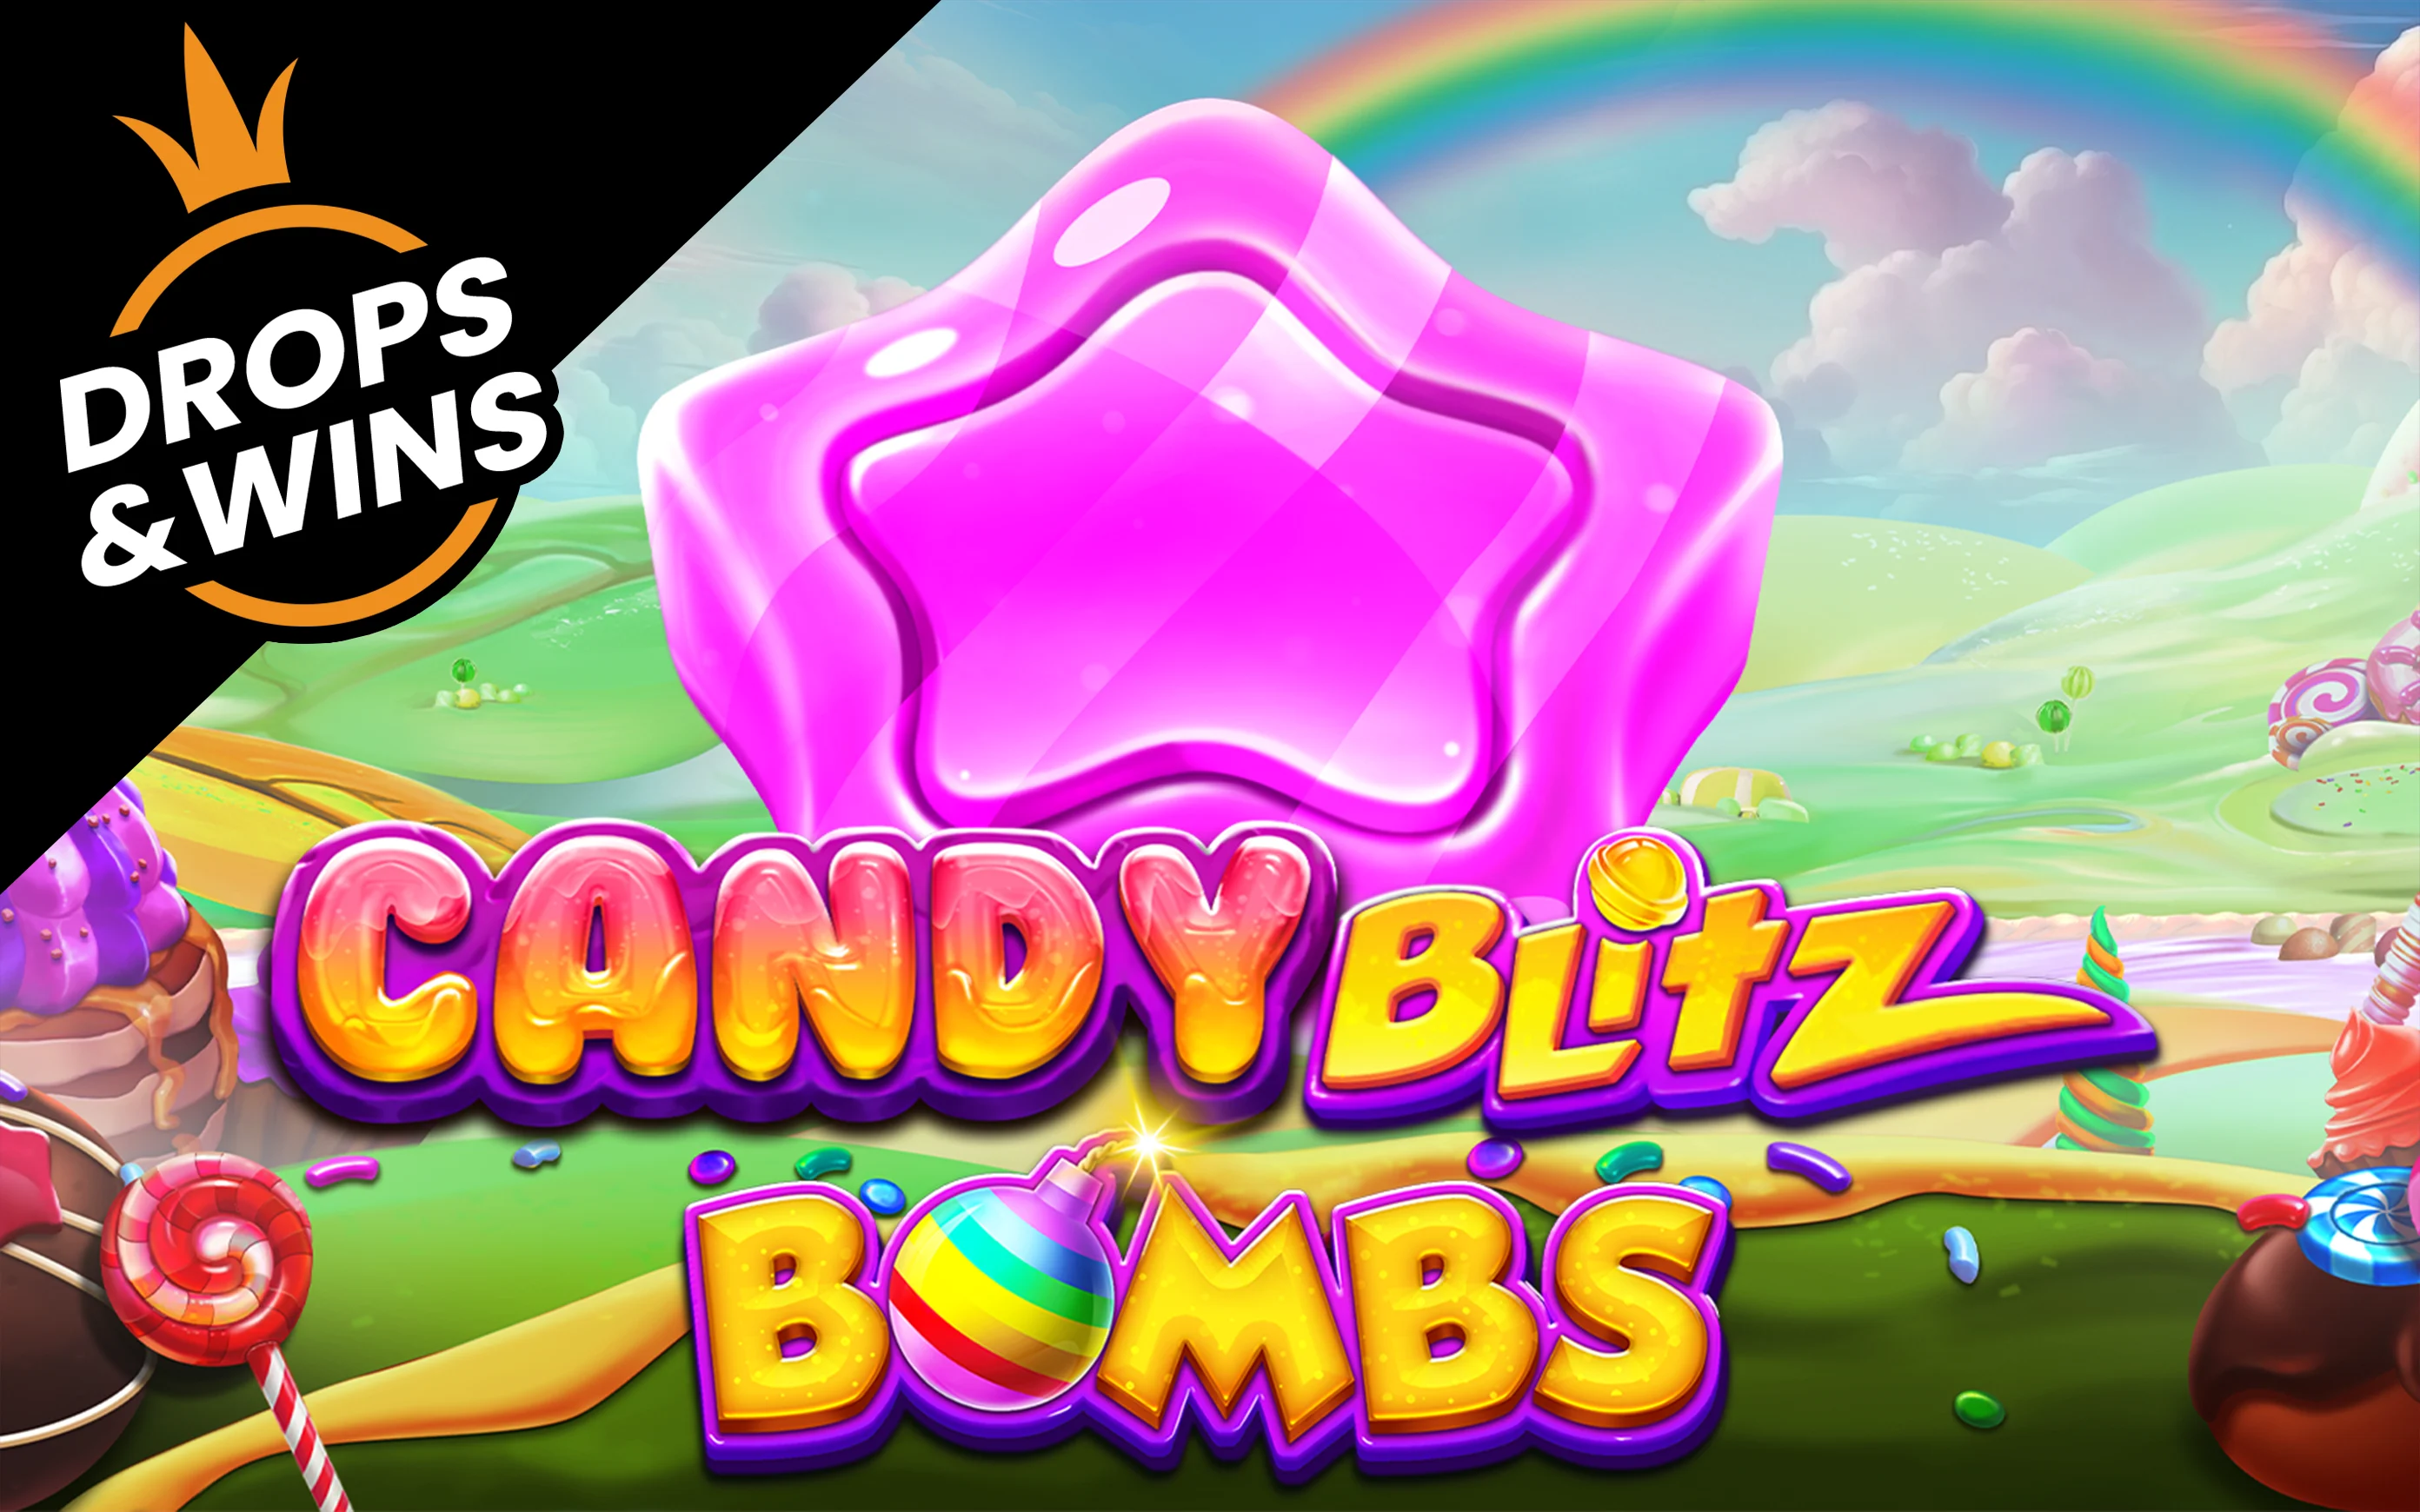 Starcasino.be online casino üzerinden Candy Blitz Bombs oynayın